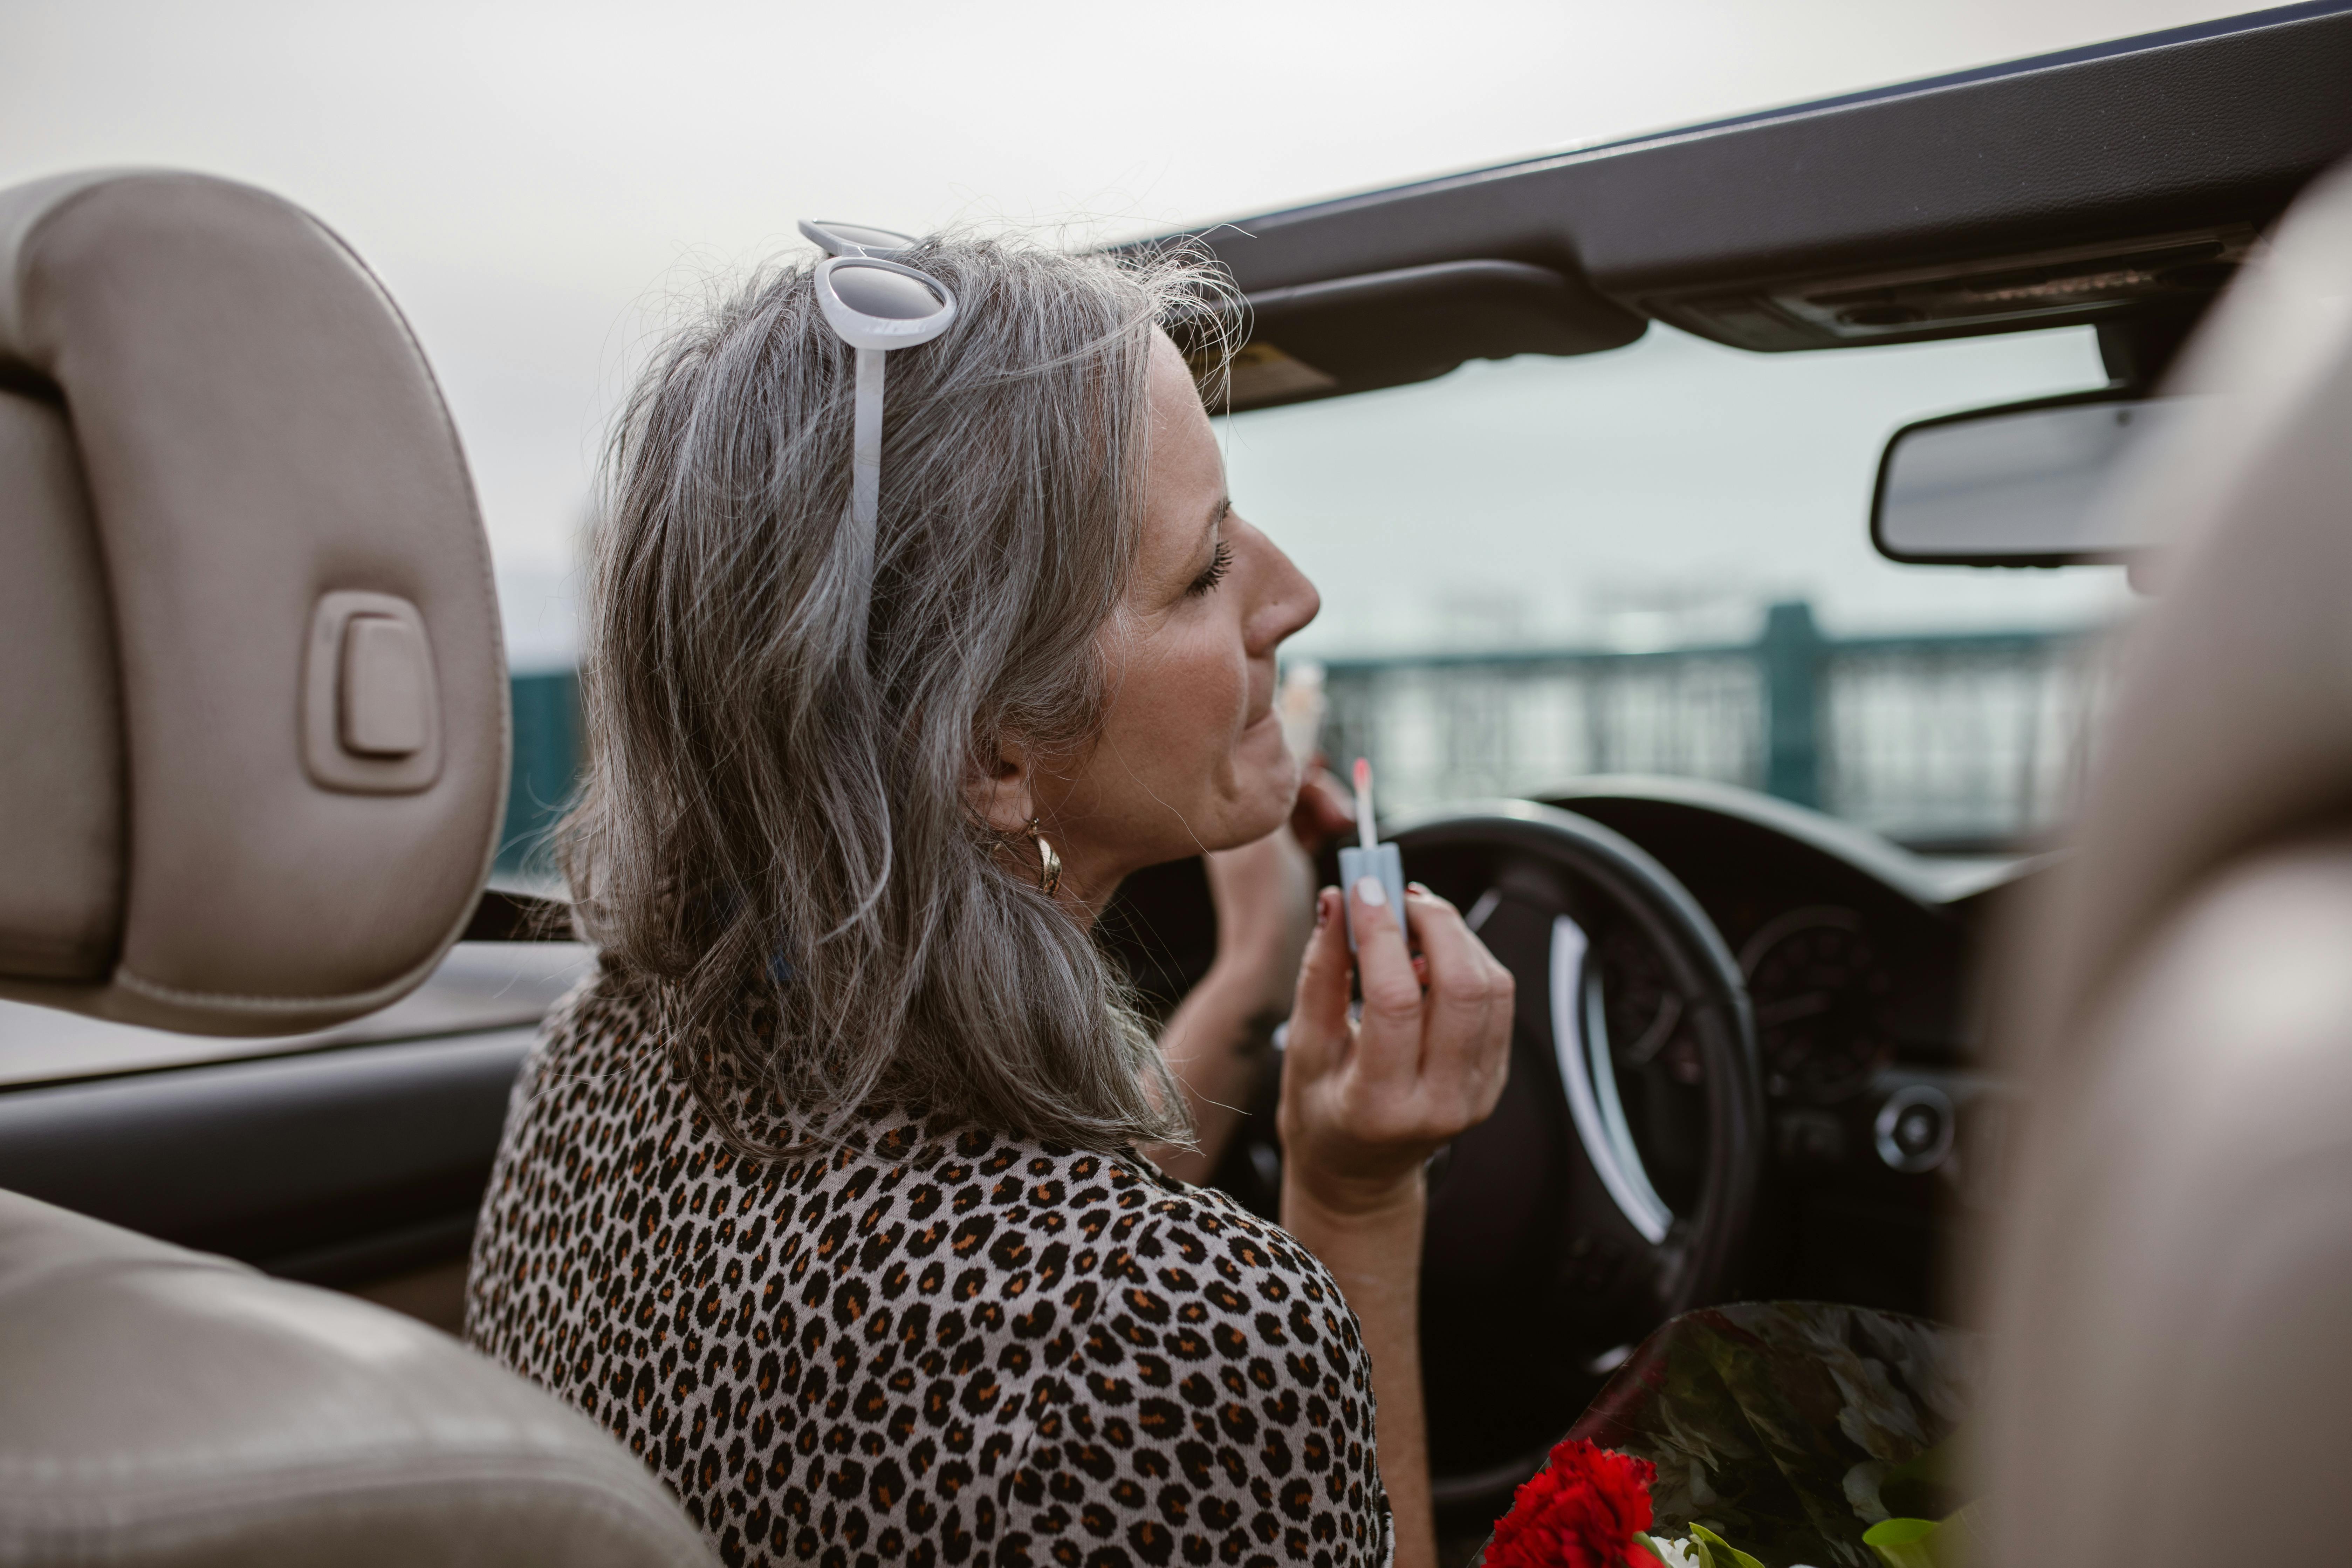 A woman applying lip balm using her car's rear mirror | Source: Pexels